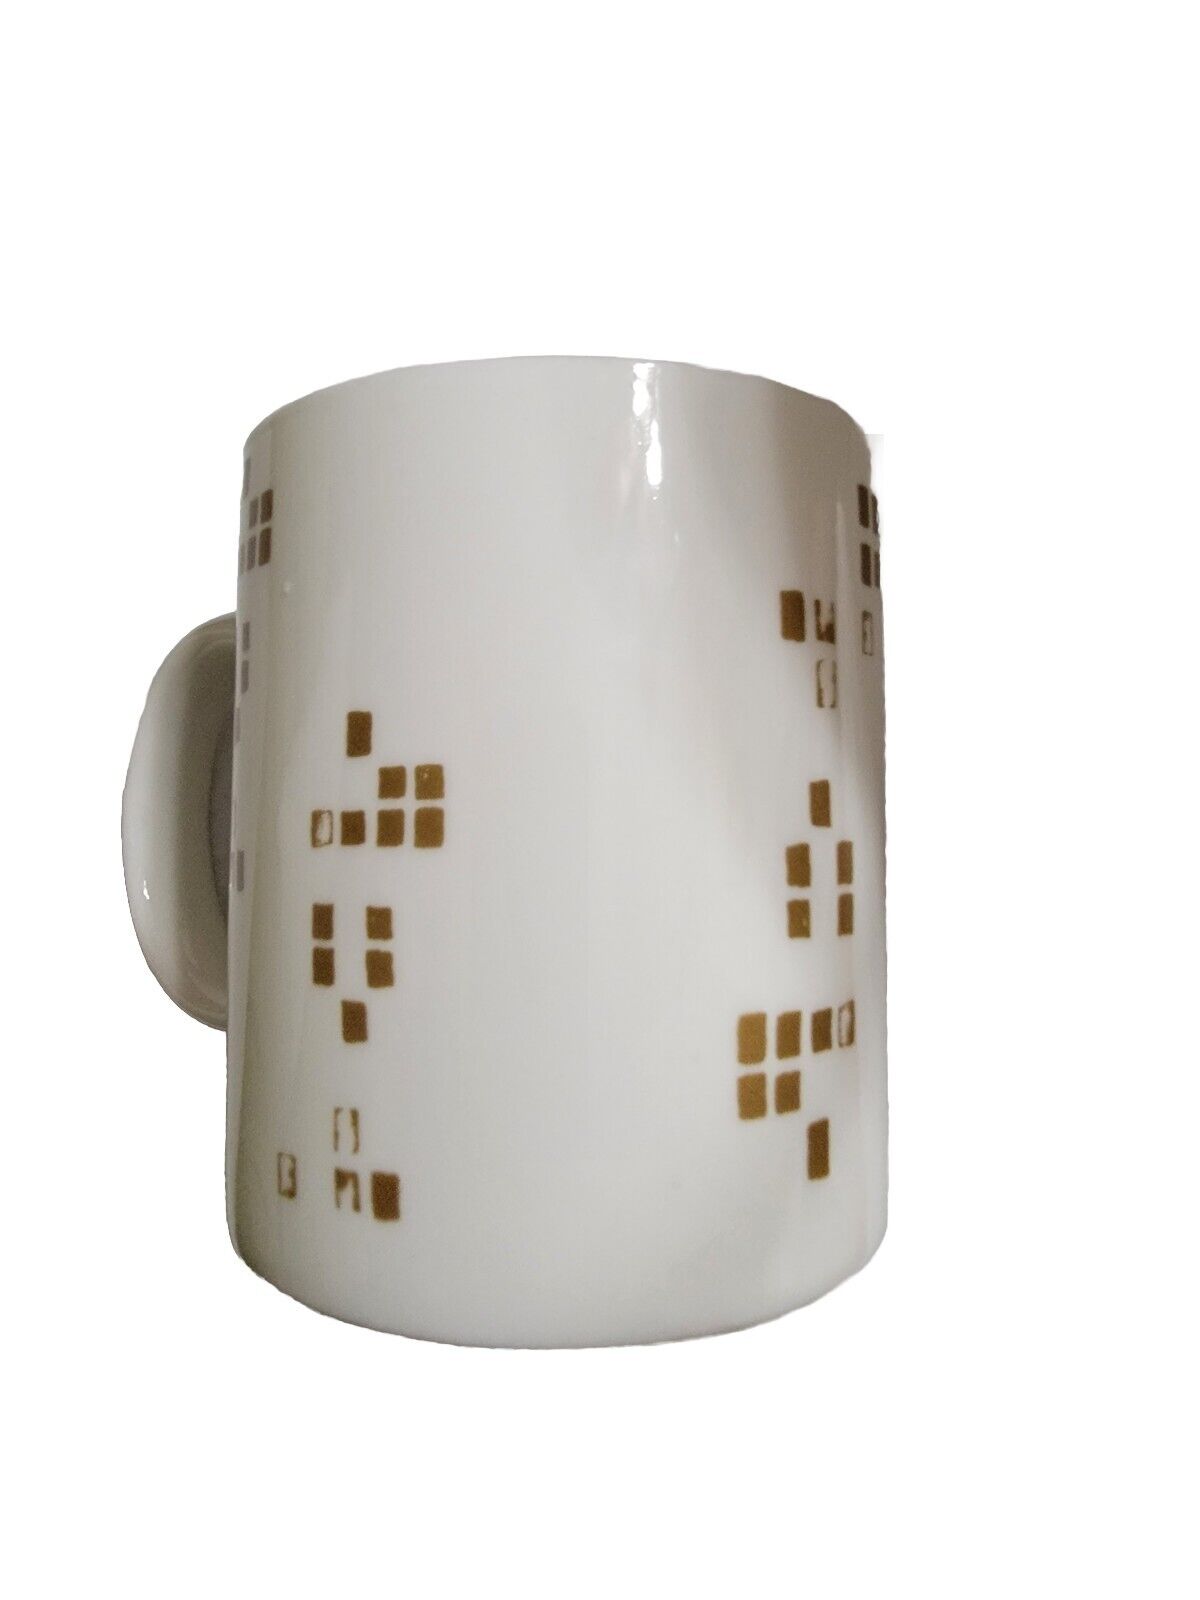 Starbucks 2014 Coffee Mug 12 oz Ceramic Cup Gold Christmas Tree COLLECTIBLE